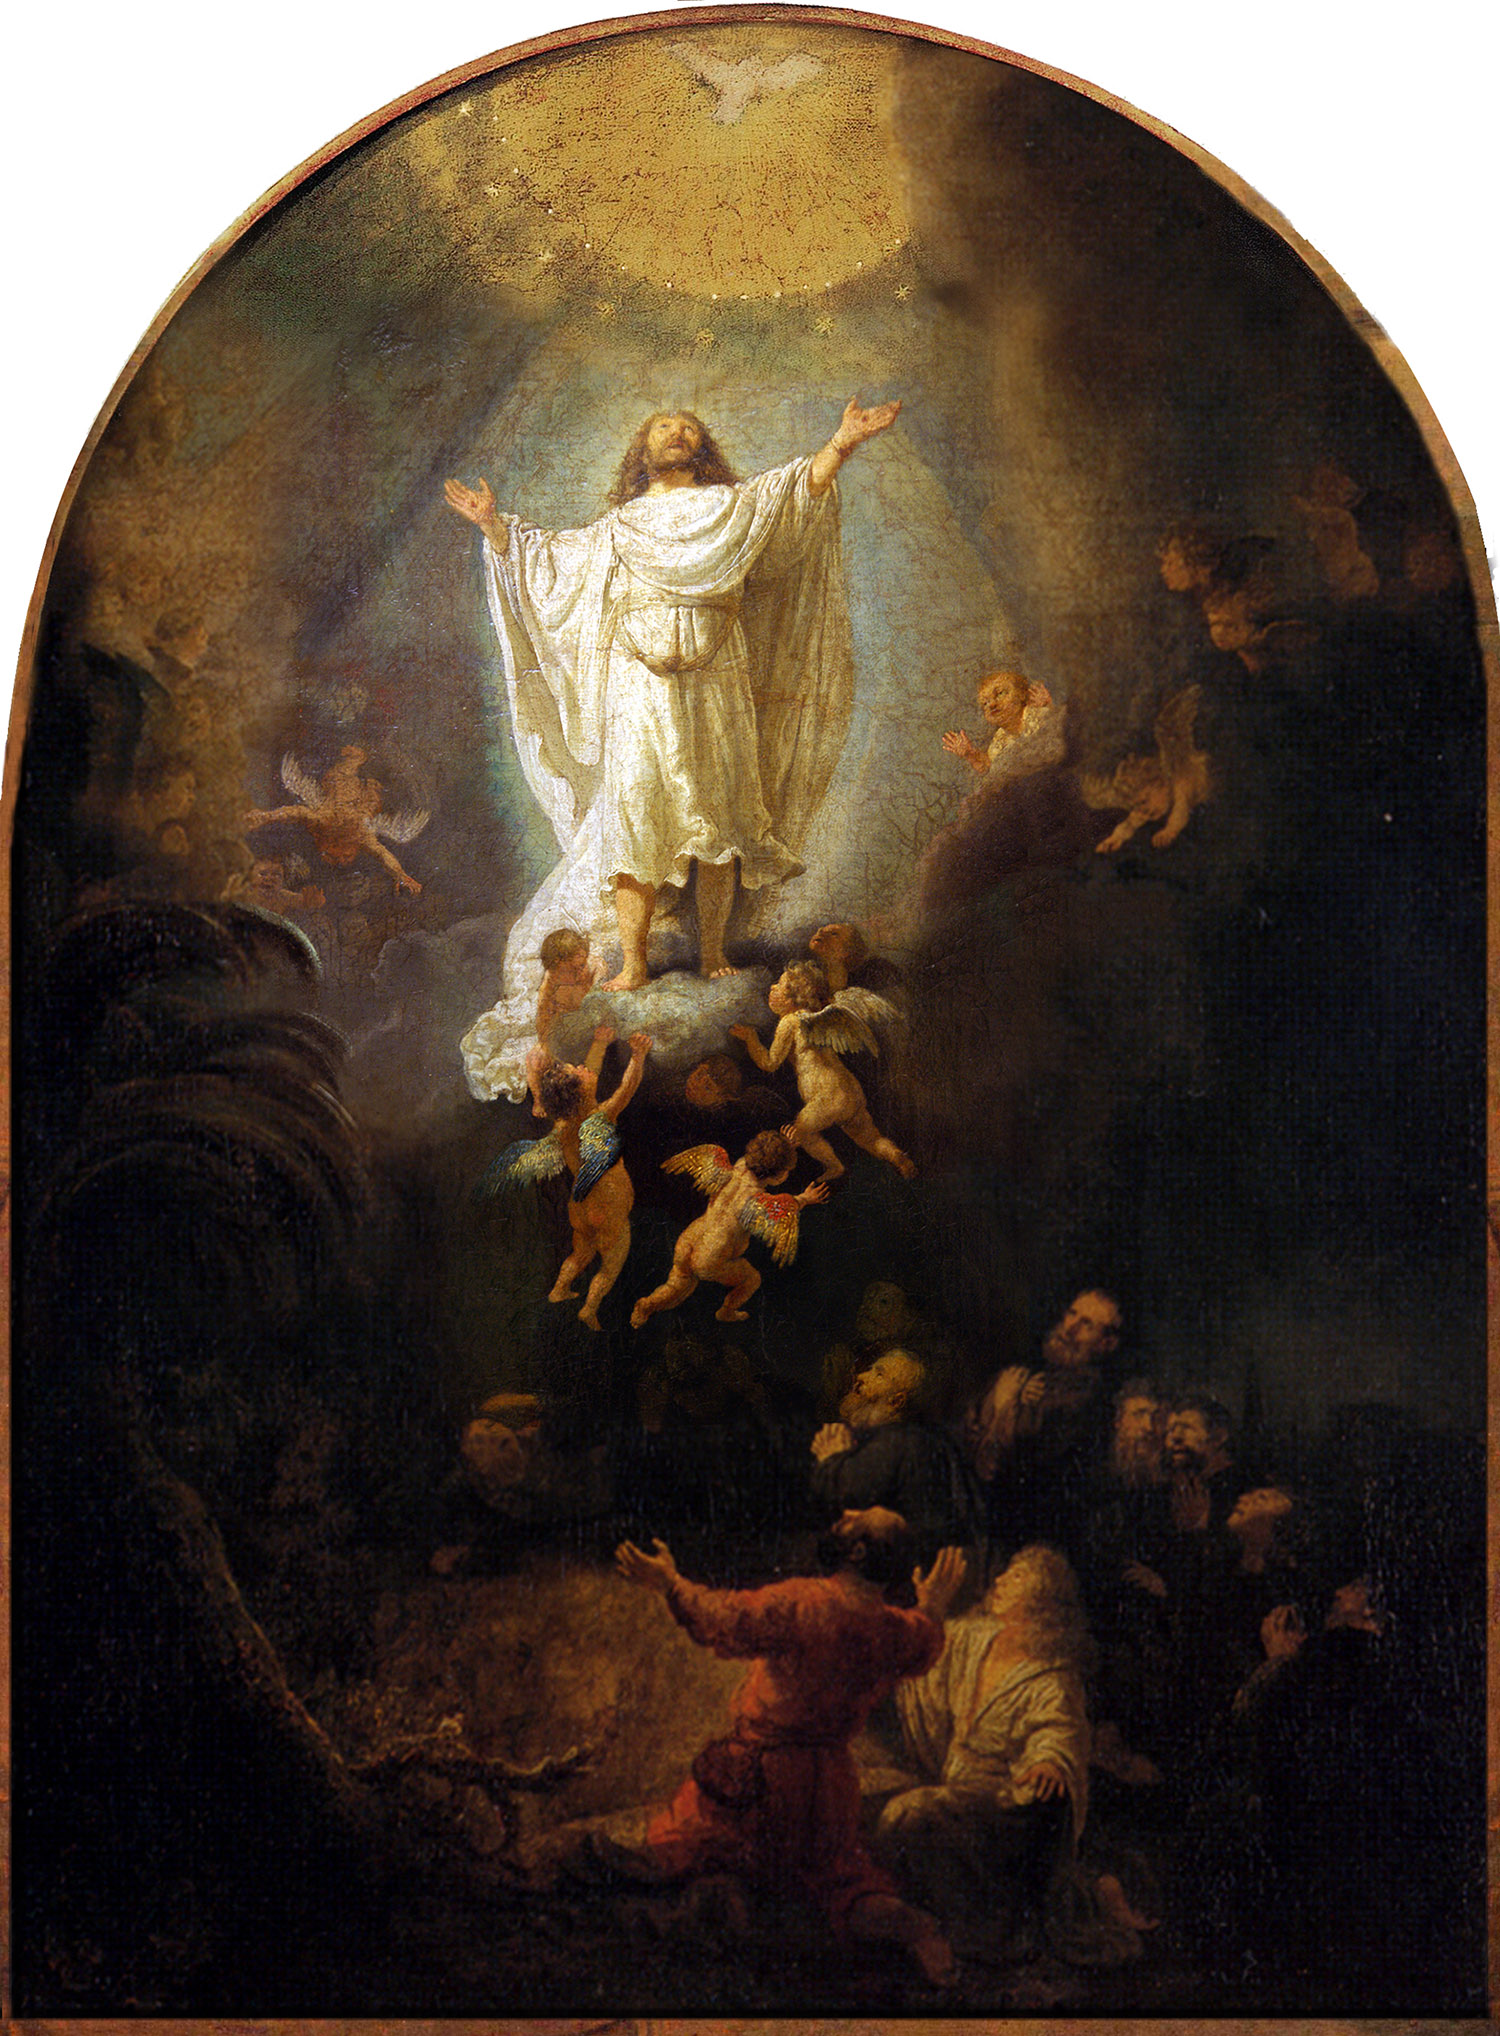 Рембрандт Харменс ван Рейн. "Вознесение Христа". 1636-1639. Старая пинакотека, Мюнхен.